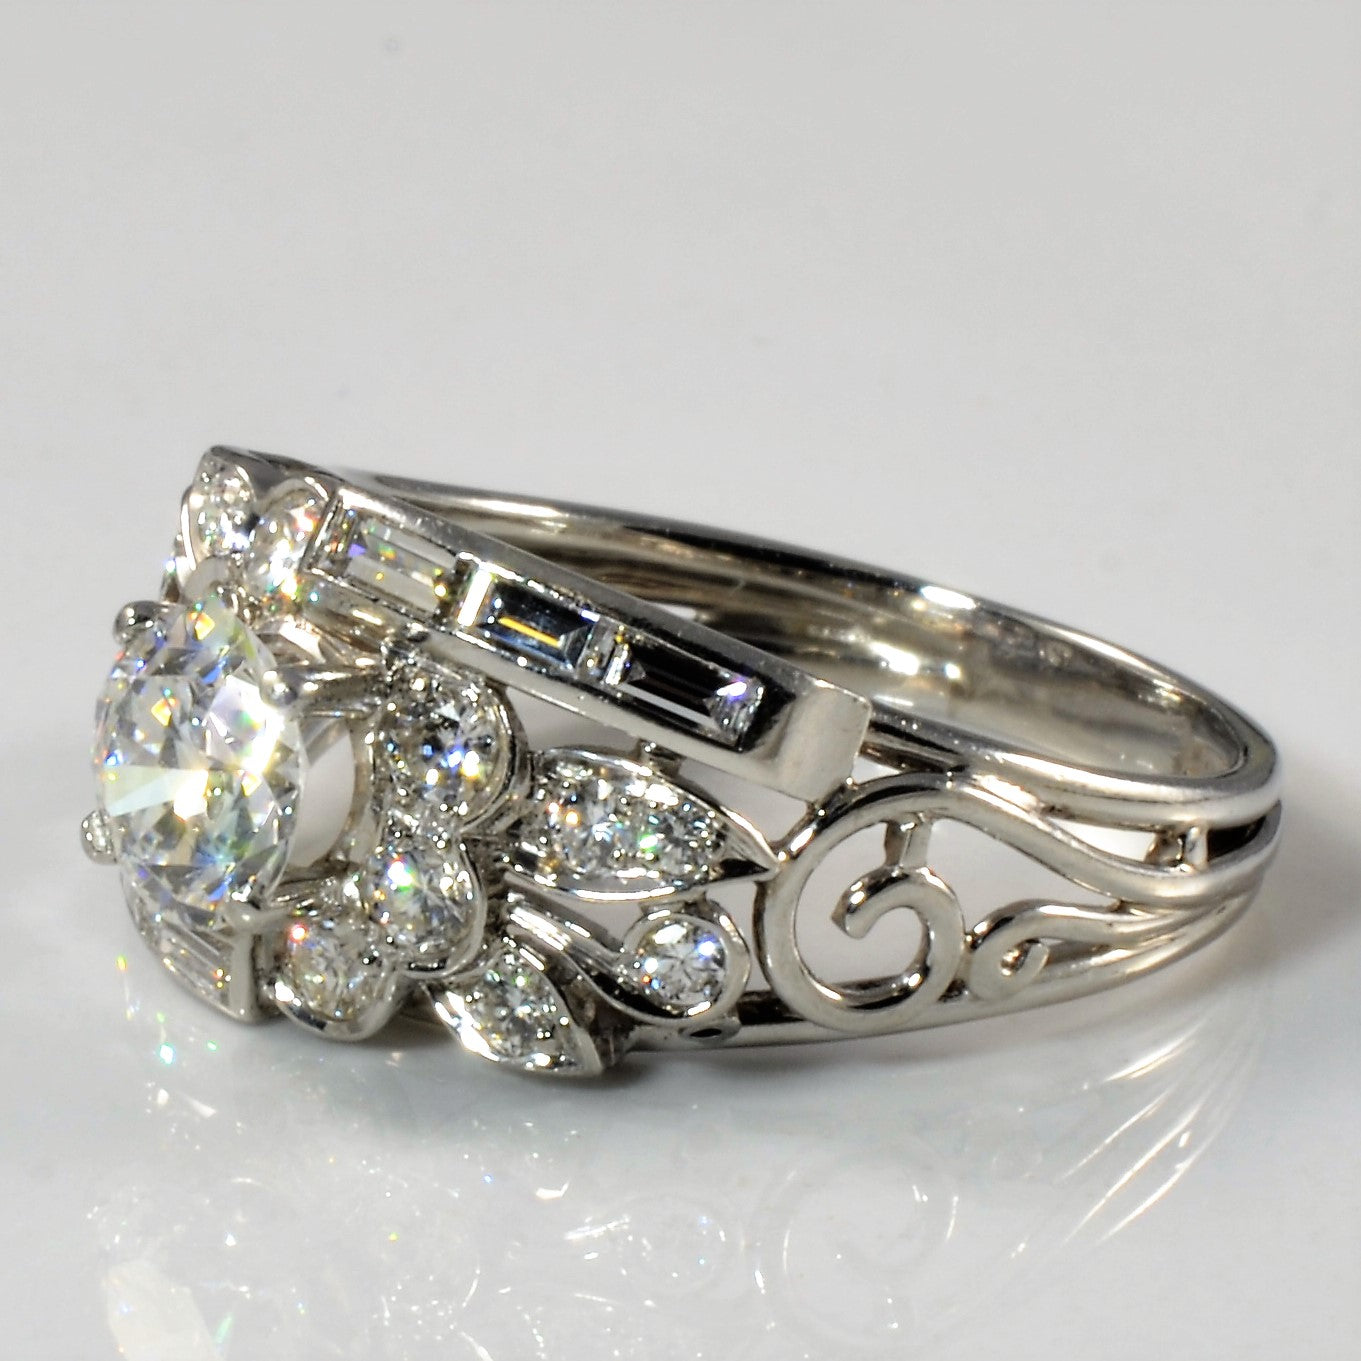 'Birks' Ornate Filigree Diamond Ring | 1.41ctw | SZ 8.5 |